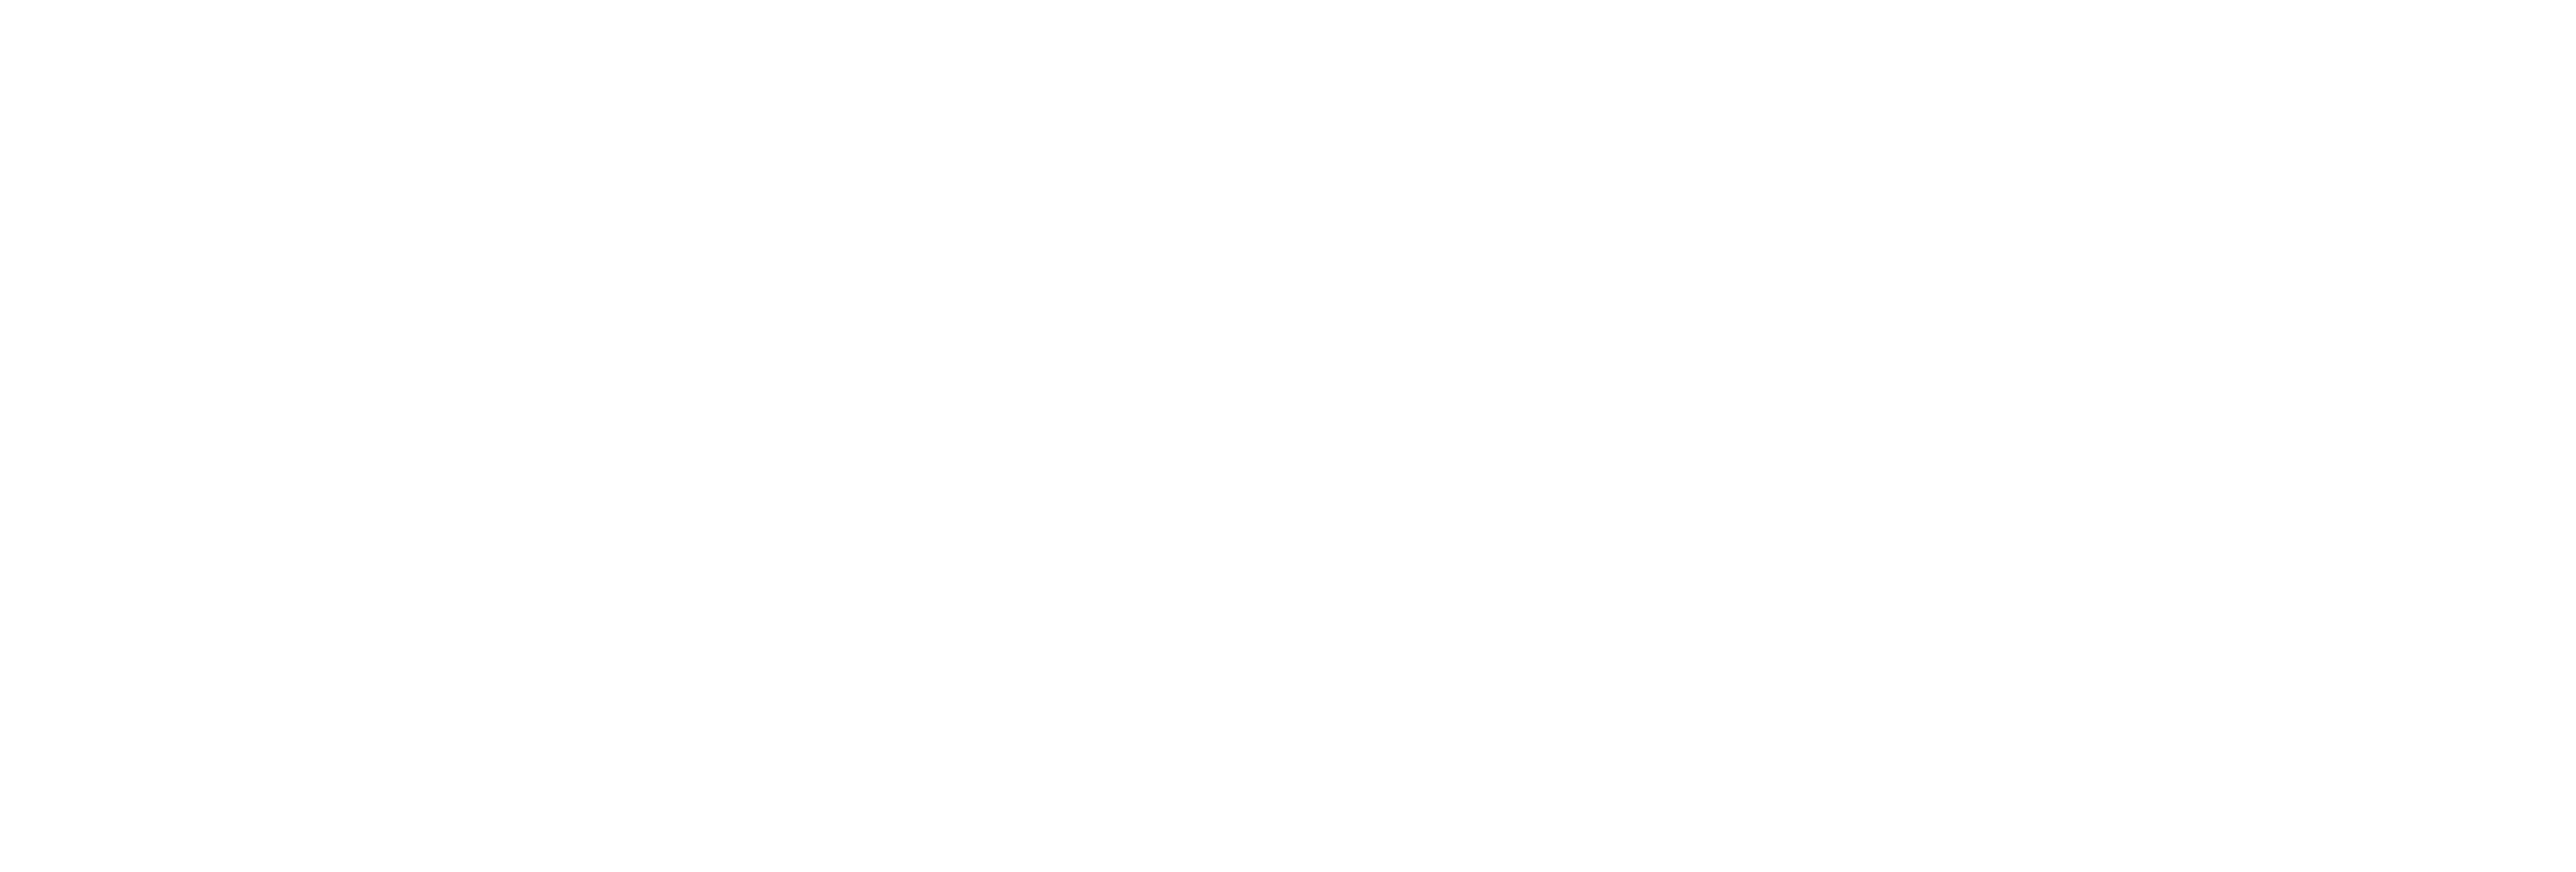 An Imprint of Outland Entertainment